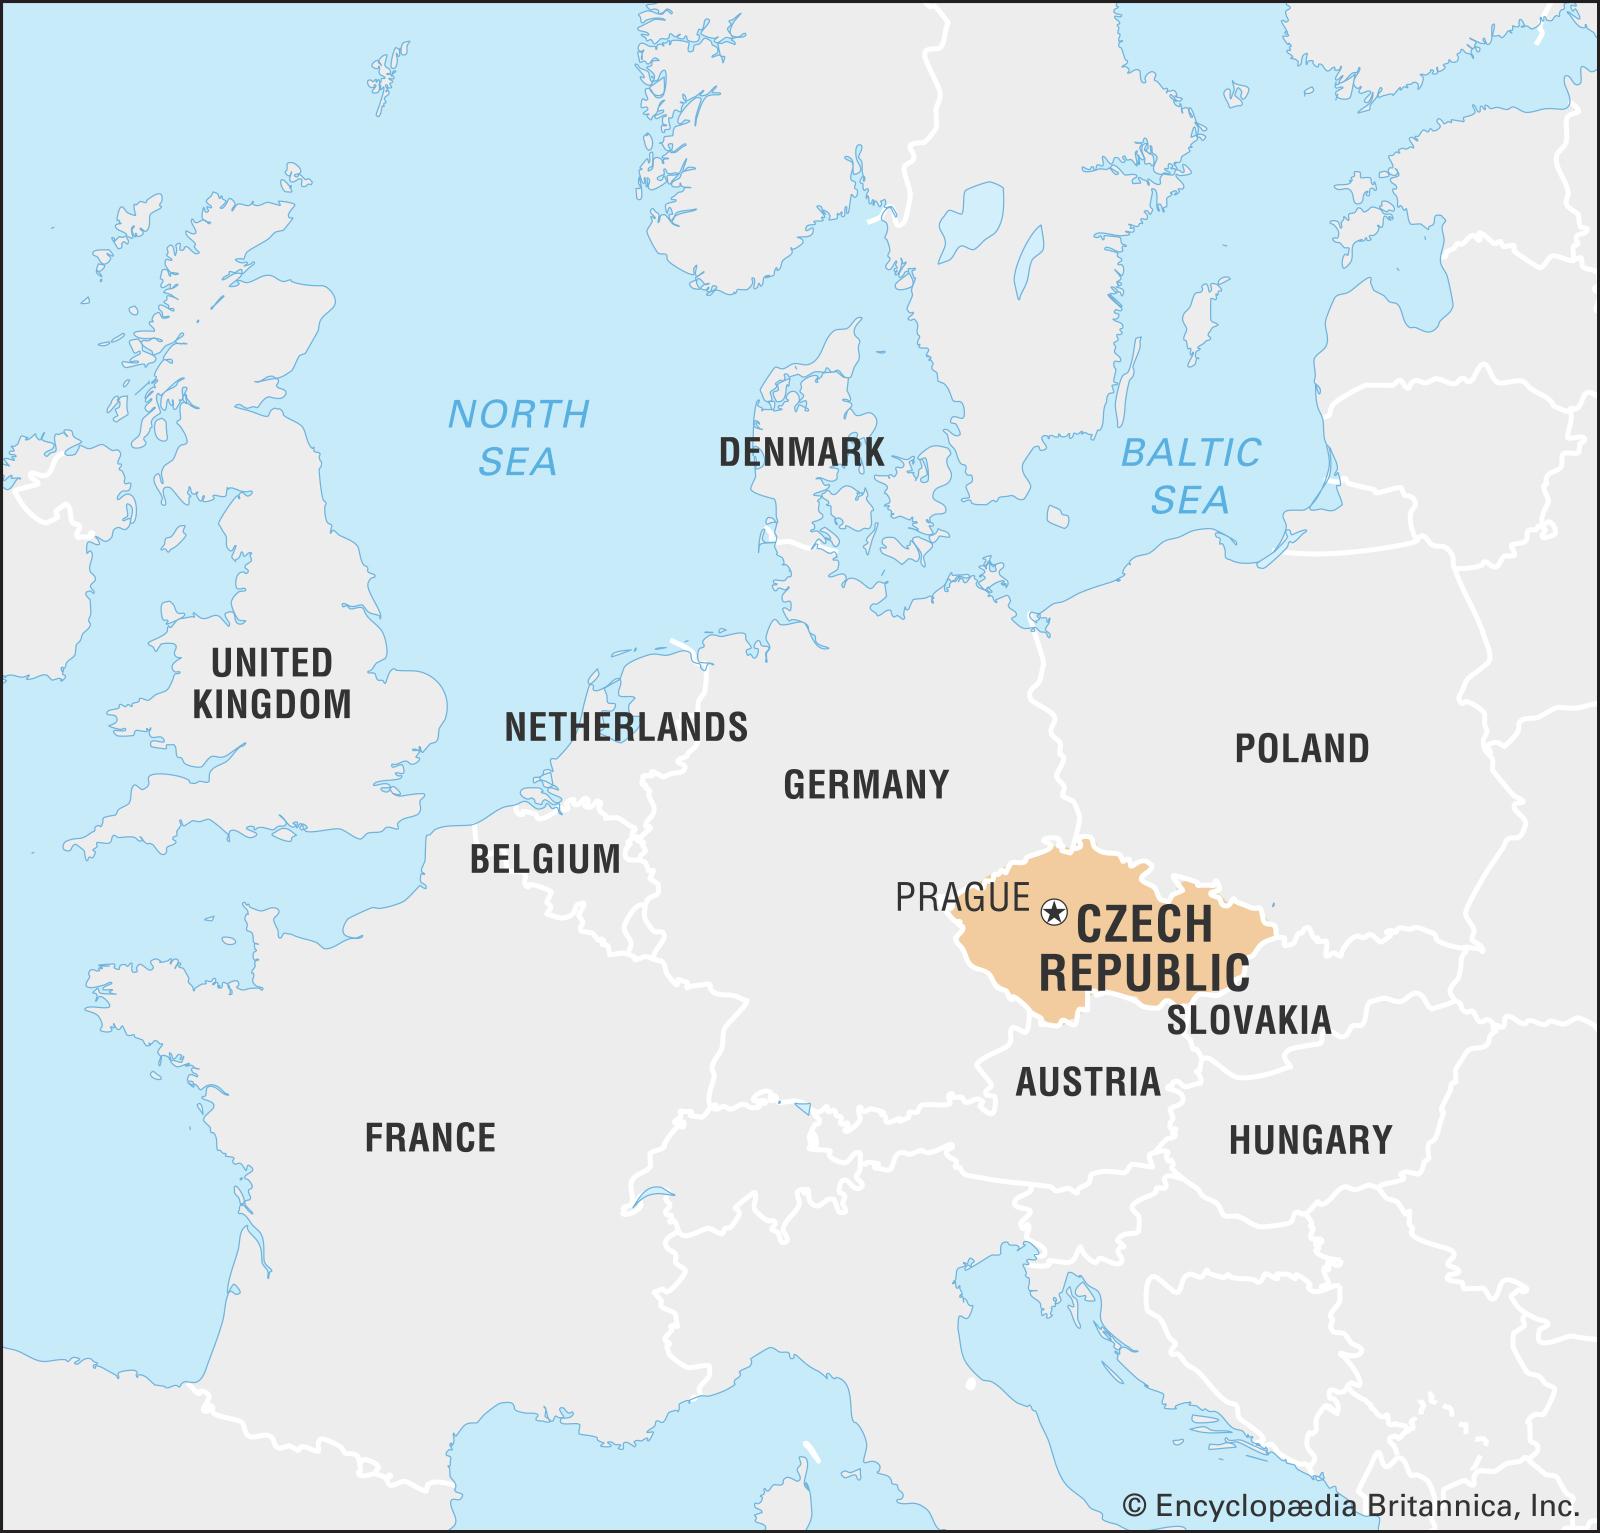 Czech Republic overview - OrgPad